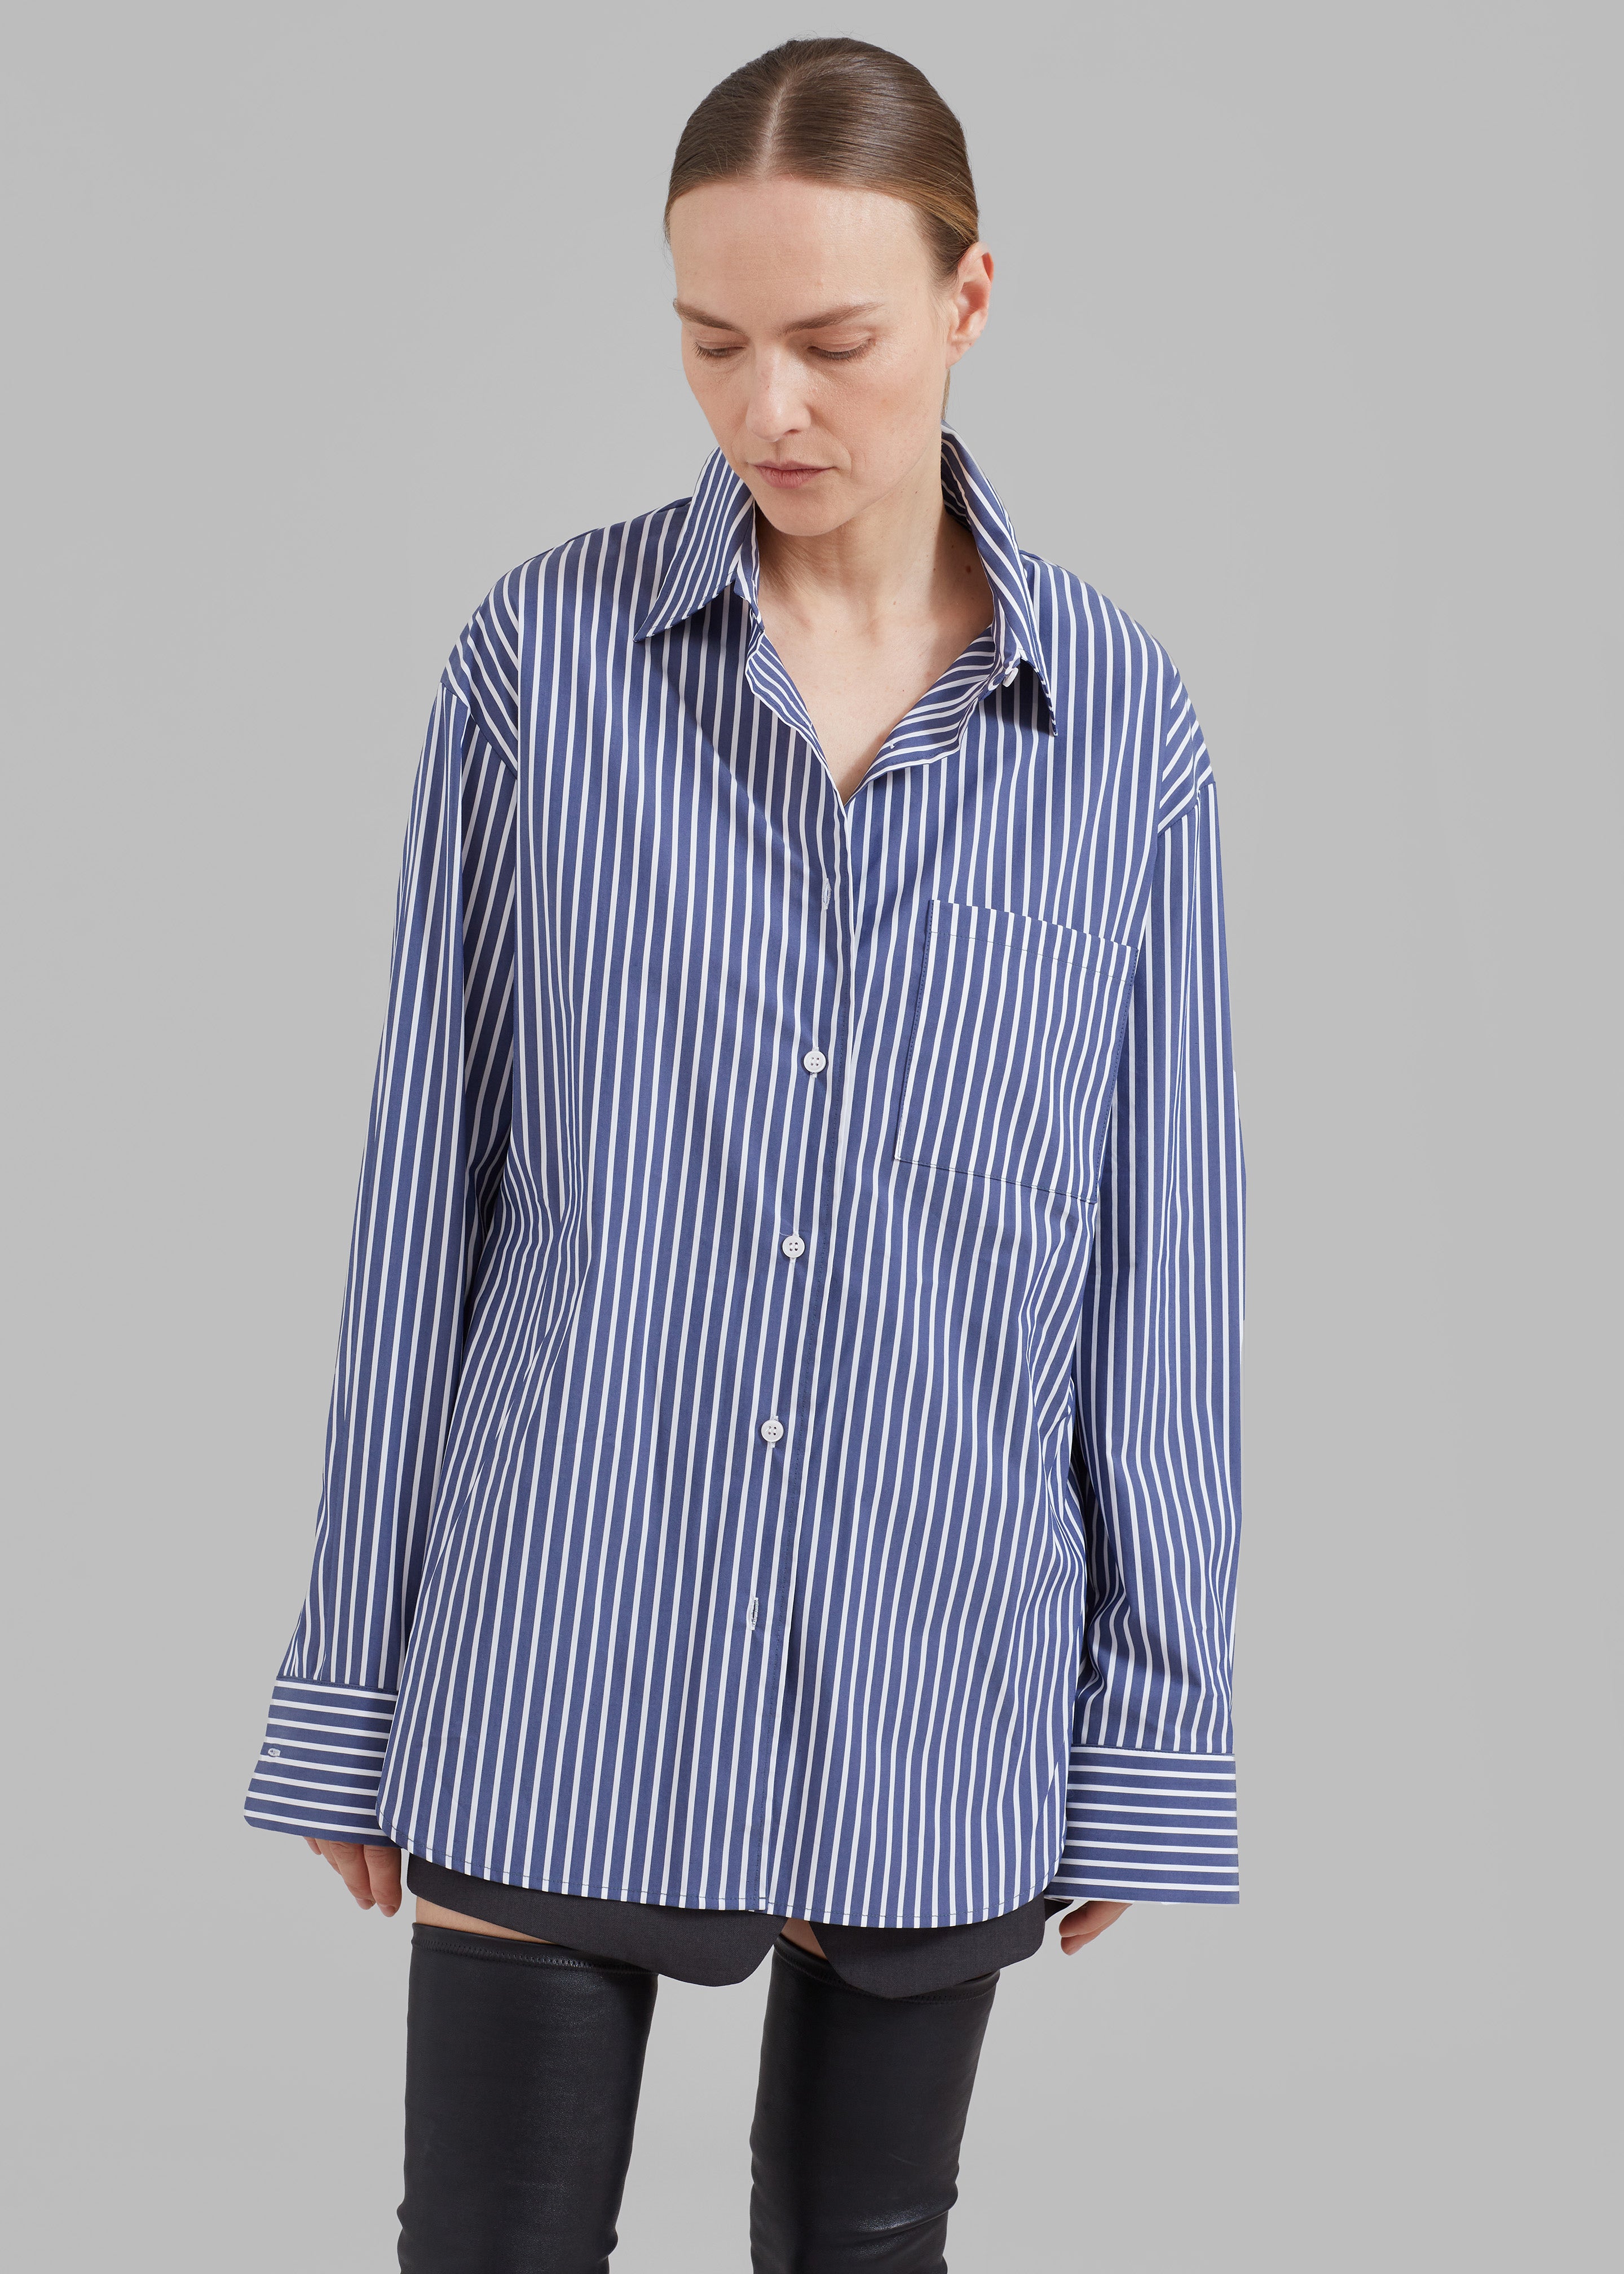 Lui Thin Stripe Shirt - Navy Stripe - 3